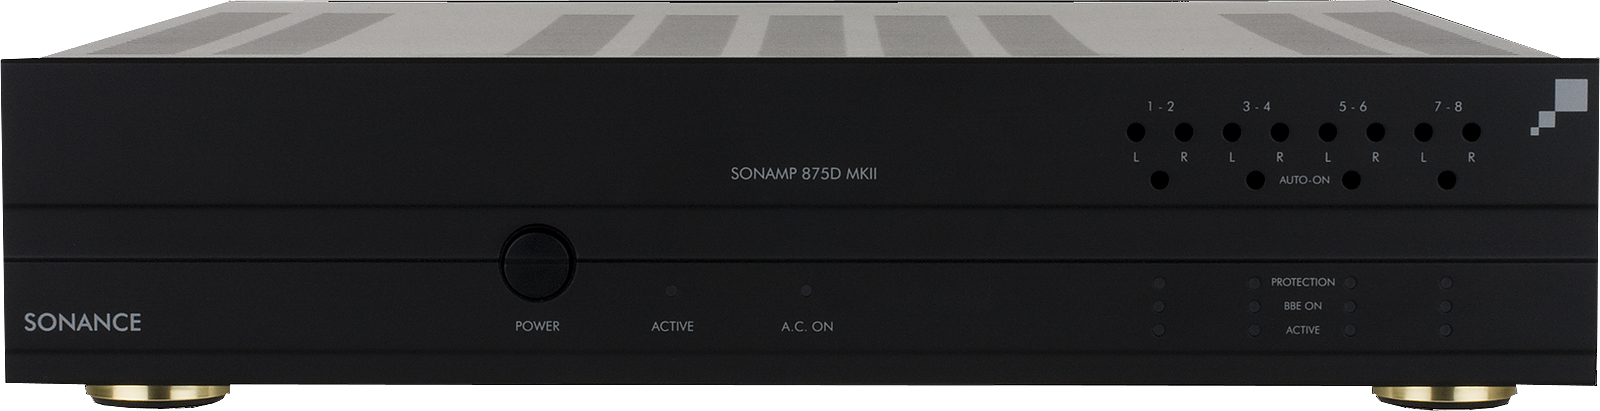 Sonance Sonamp 875D MkII